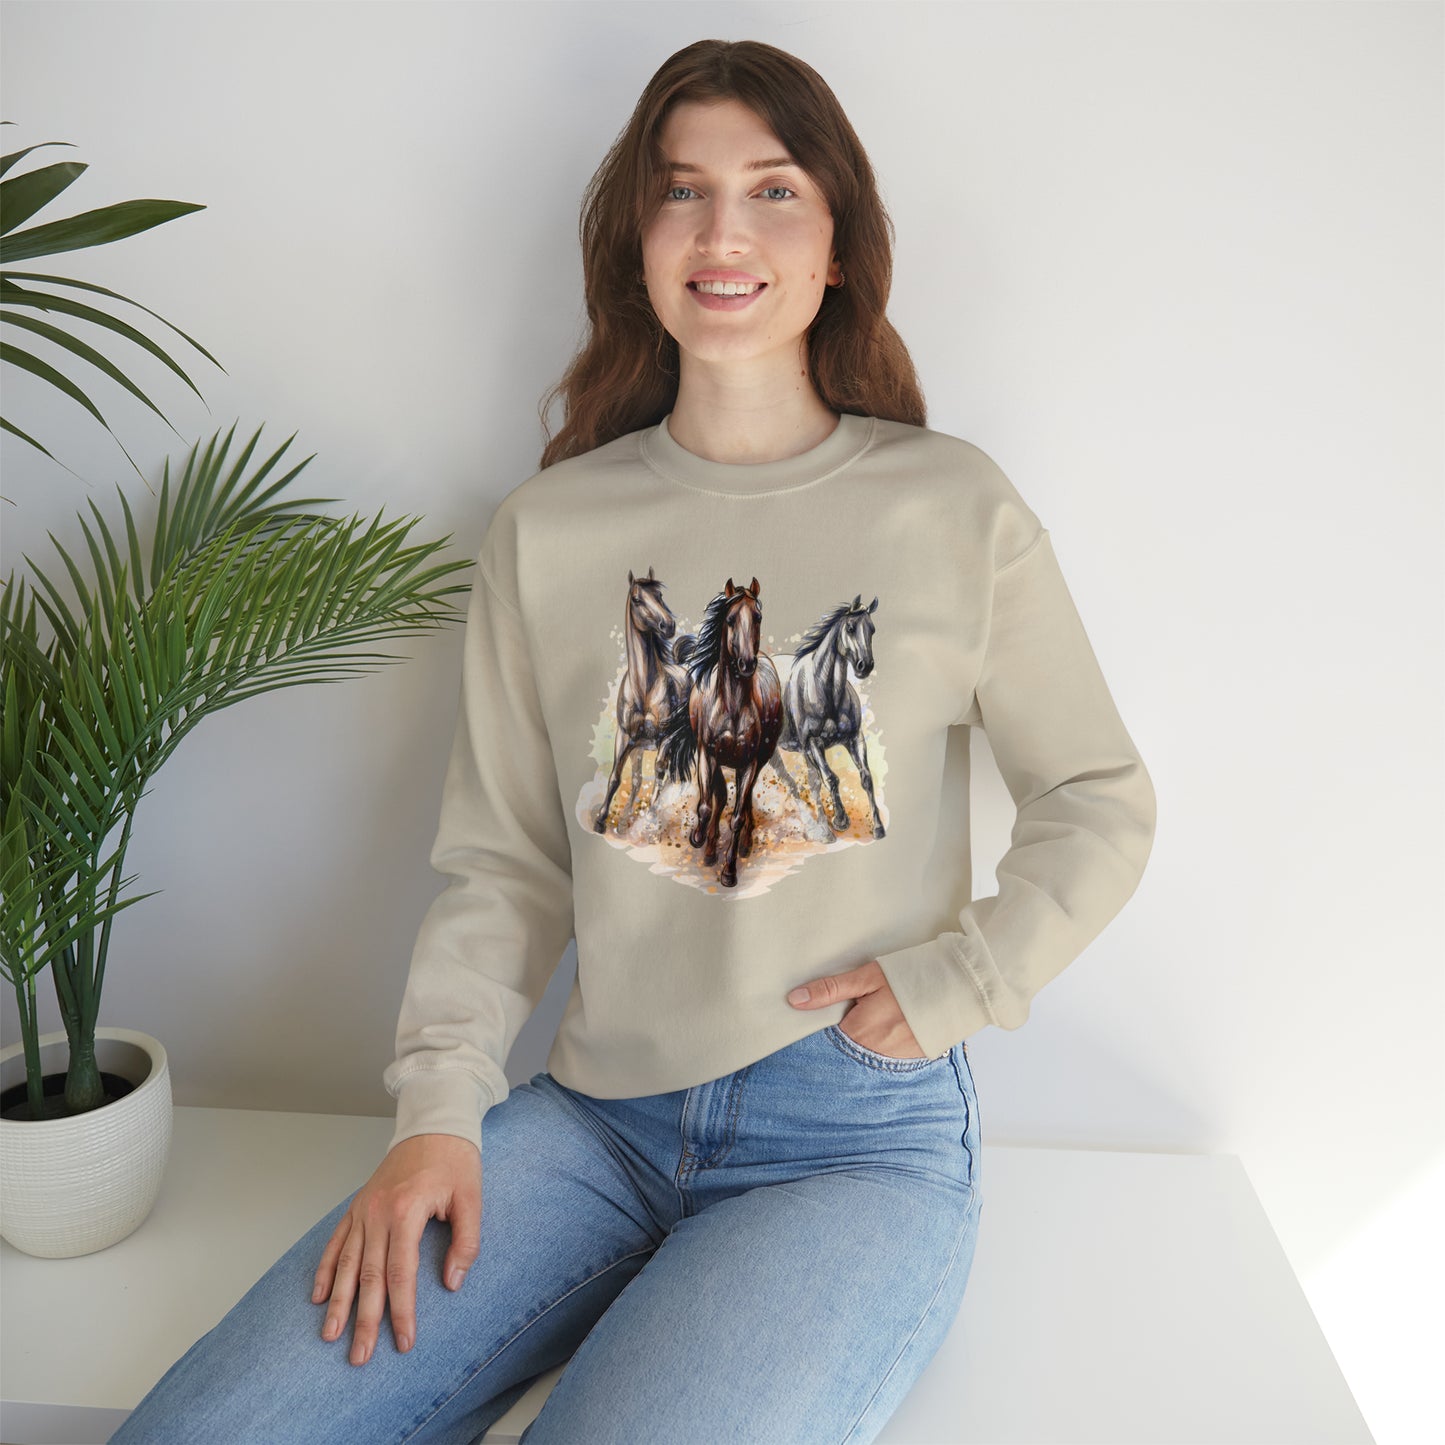 Horse Sweatshirt,  Vintage Graphic Sweater Watercolor Animal Lover Equestrian Rider Gift Men Women Jumper Crewneck Apparel